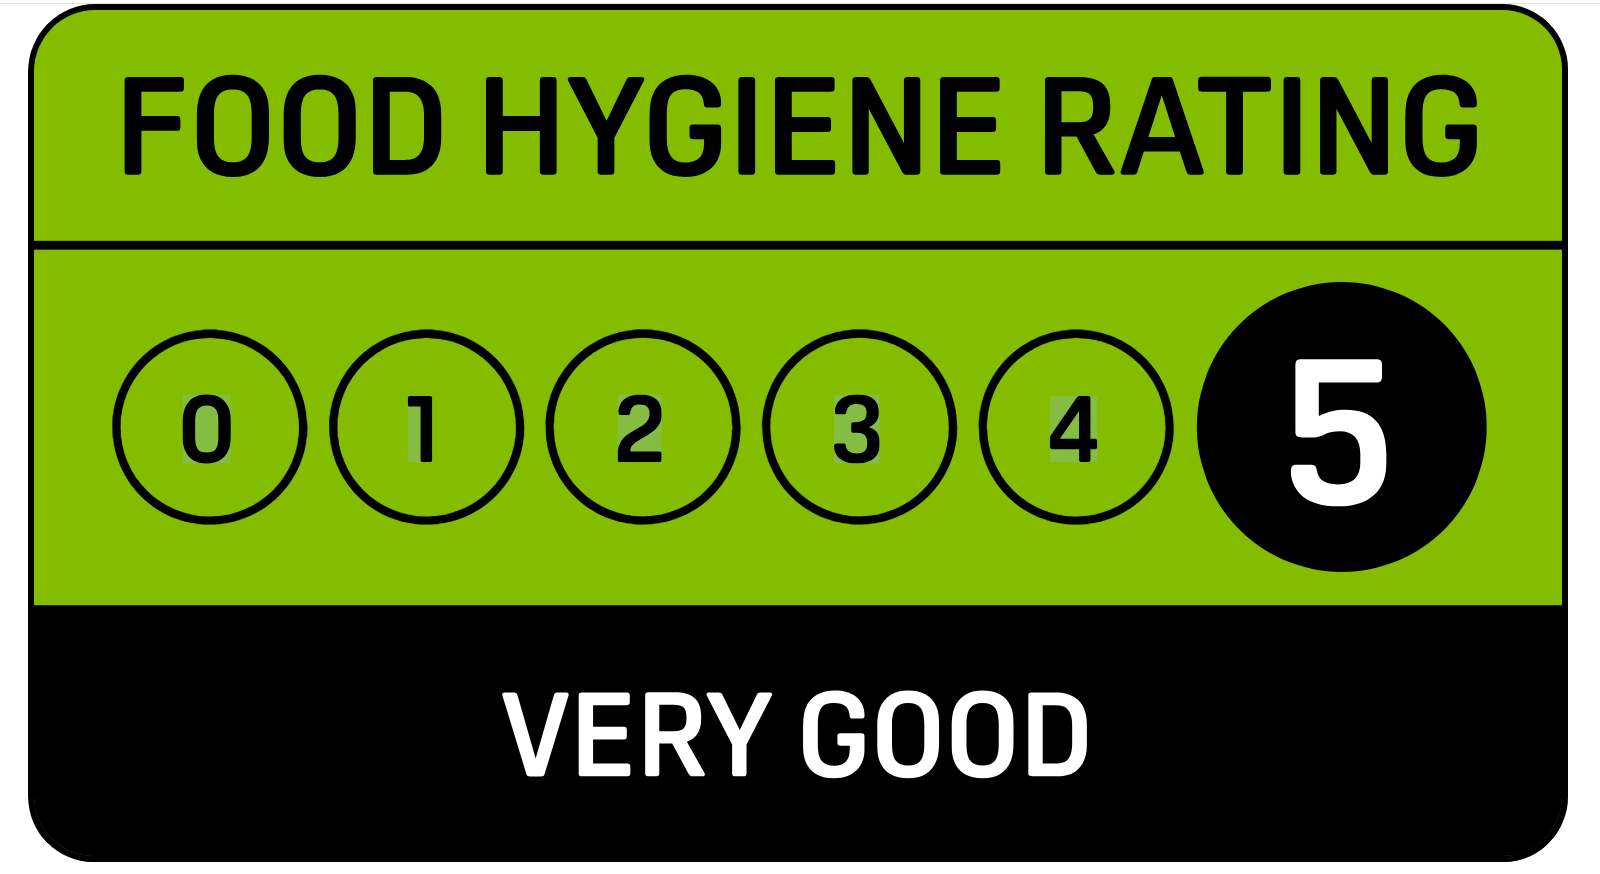 Food Hygiene Rating of 5